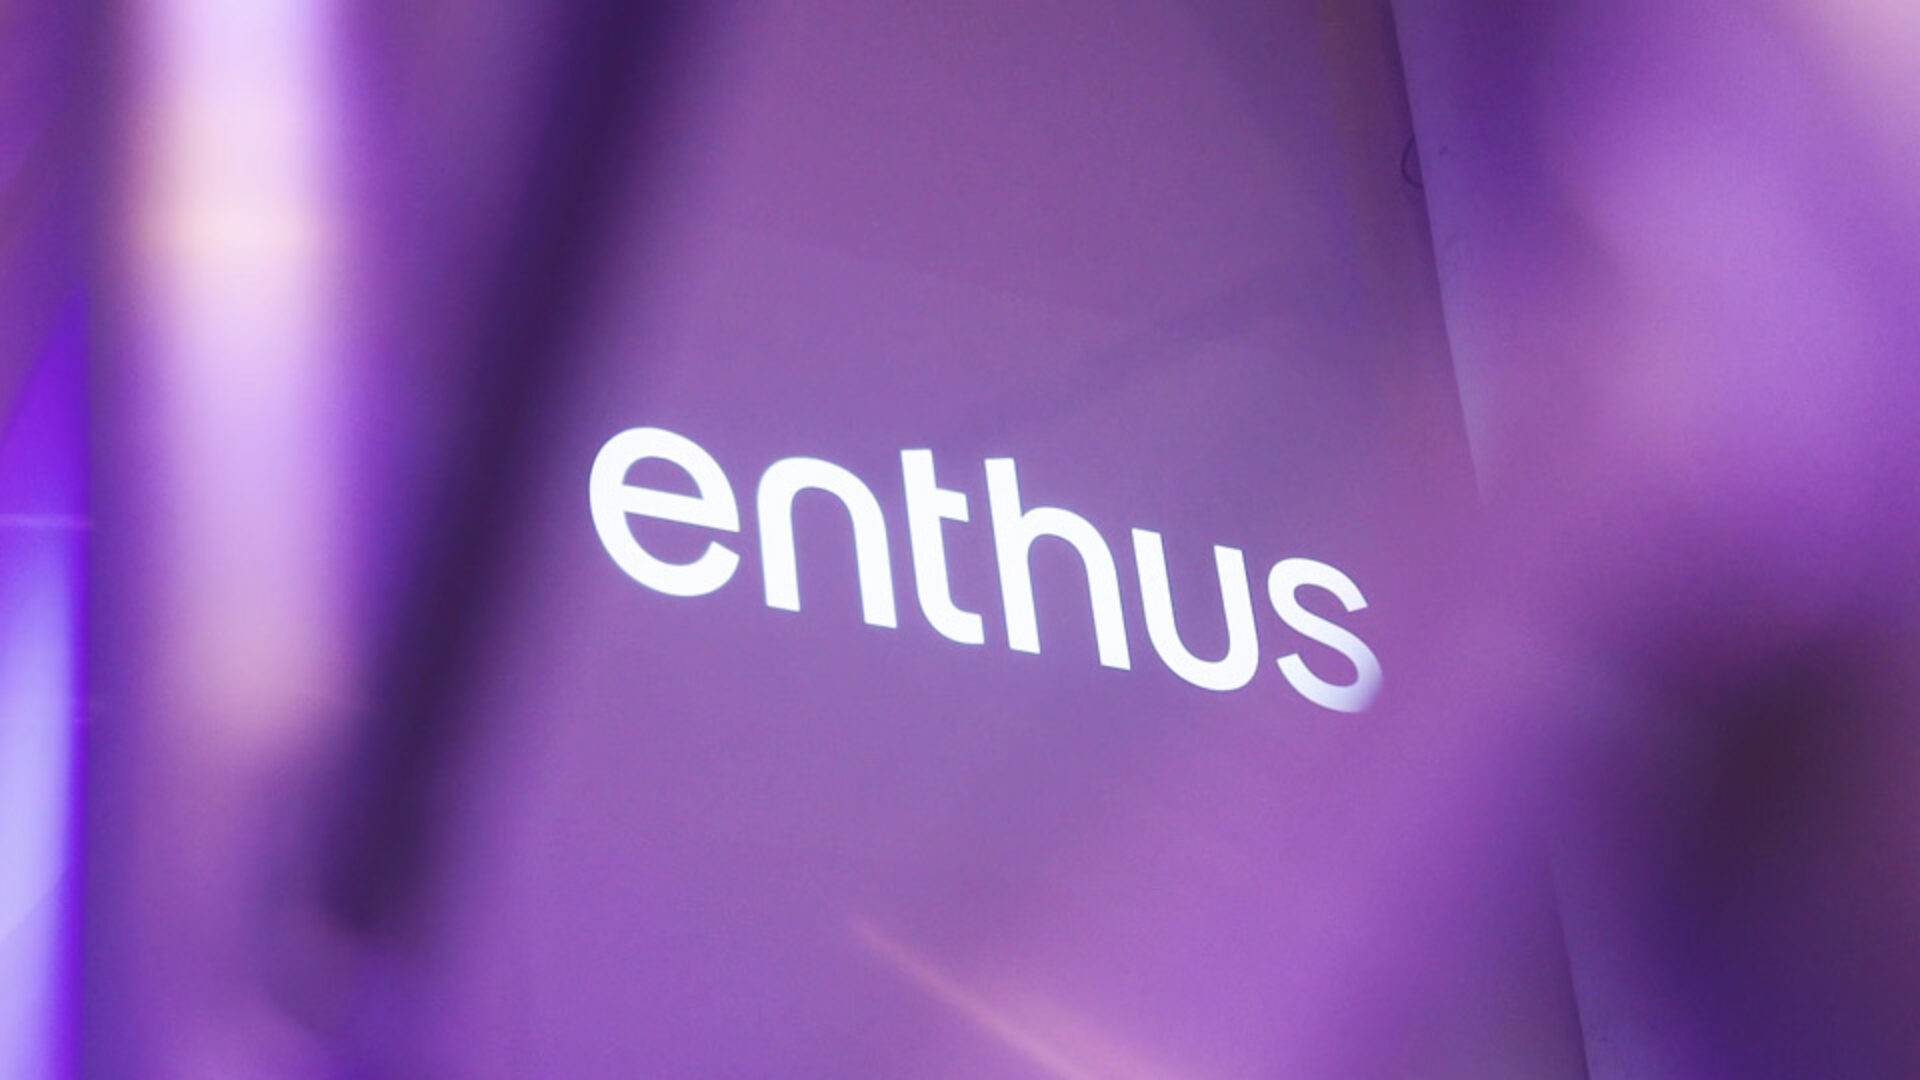 enthus Logo